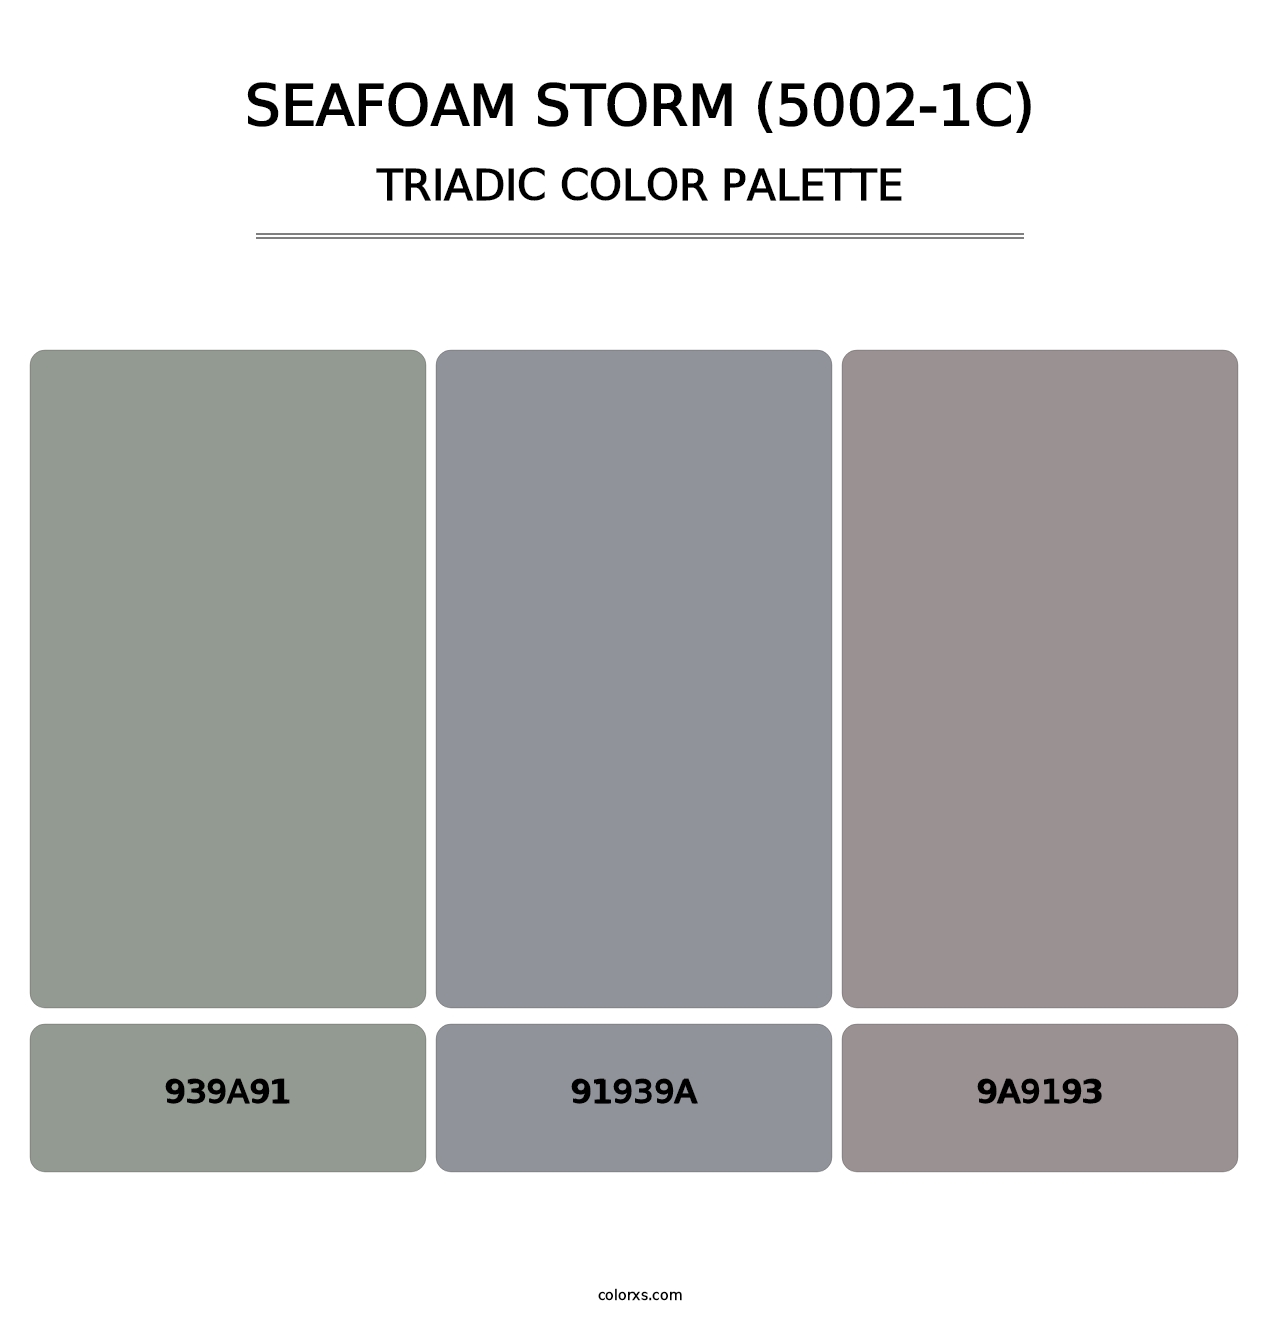 Seafoam Storm (5002-1C) - Triadic Color Palette